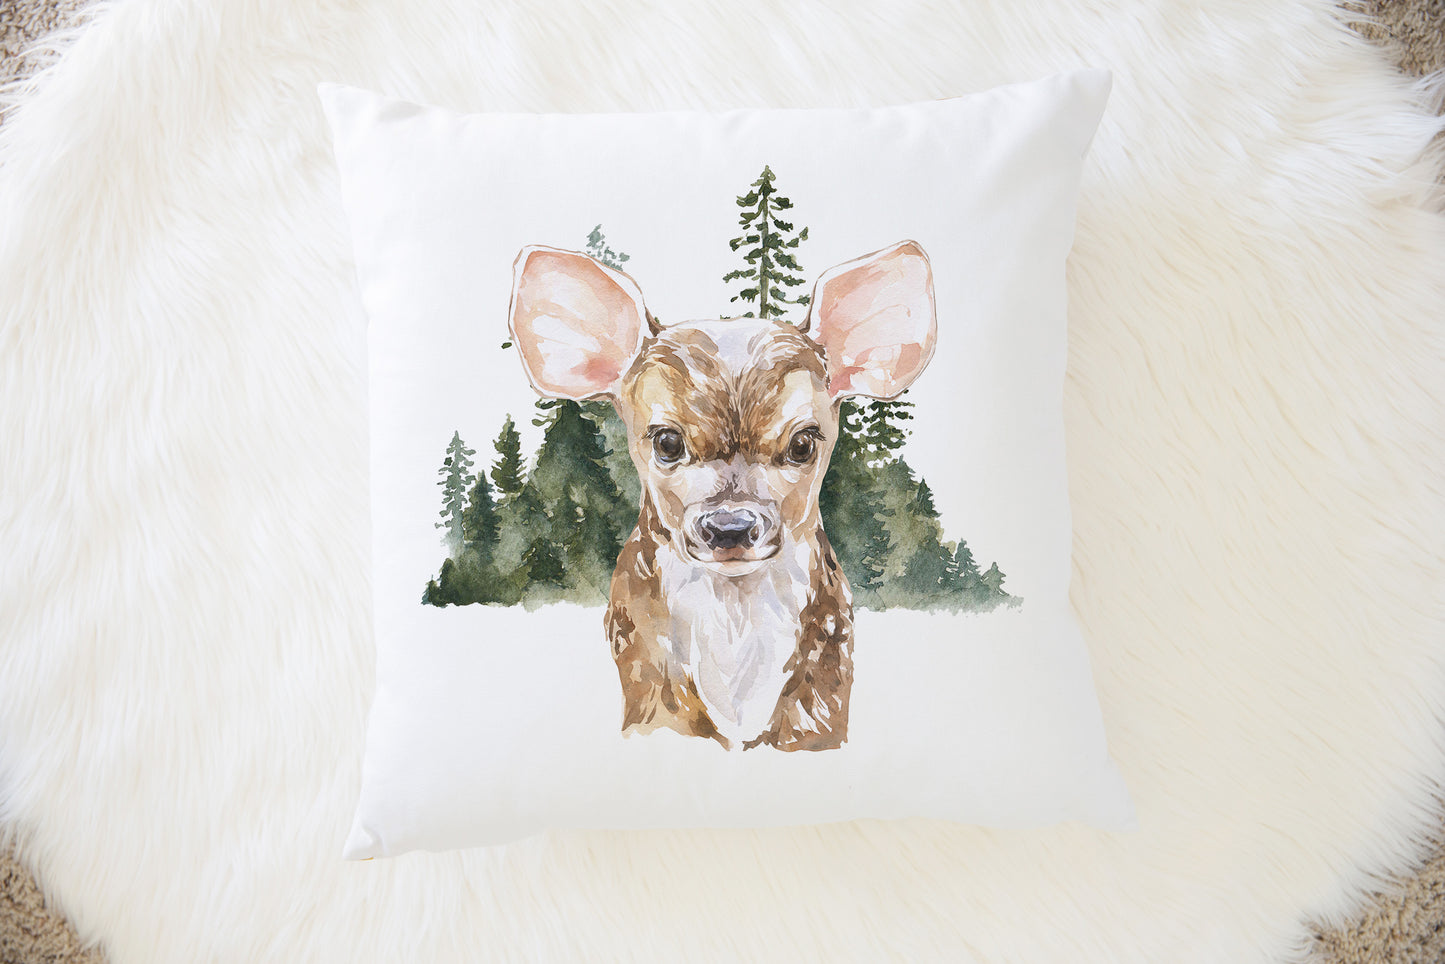 Deer Pillow Cover, Woodland Nursery Decor - Wild Woodland